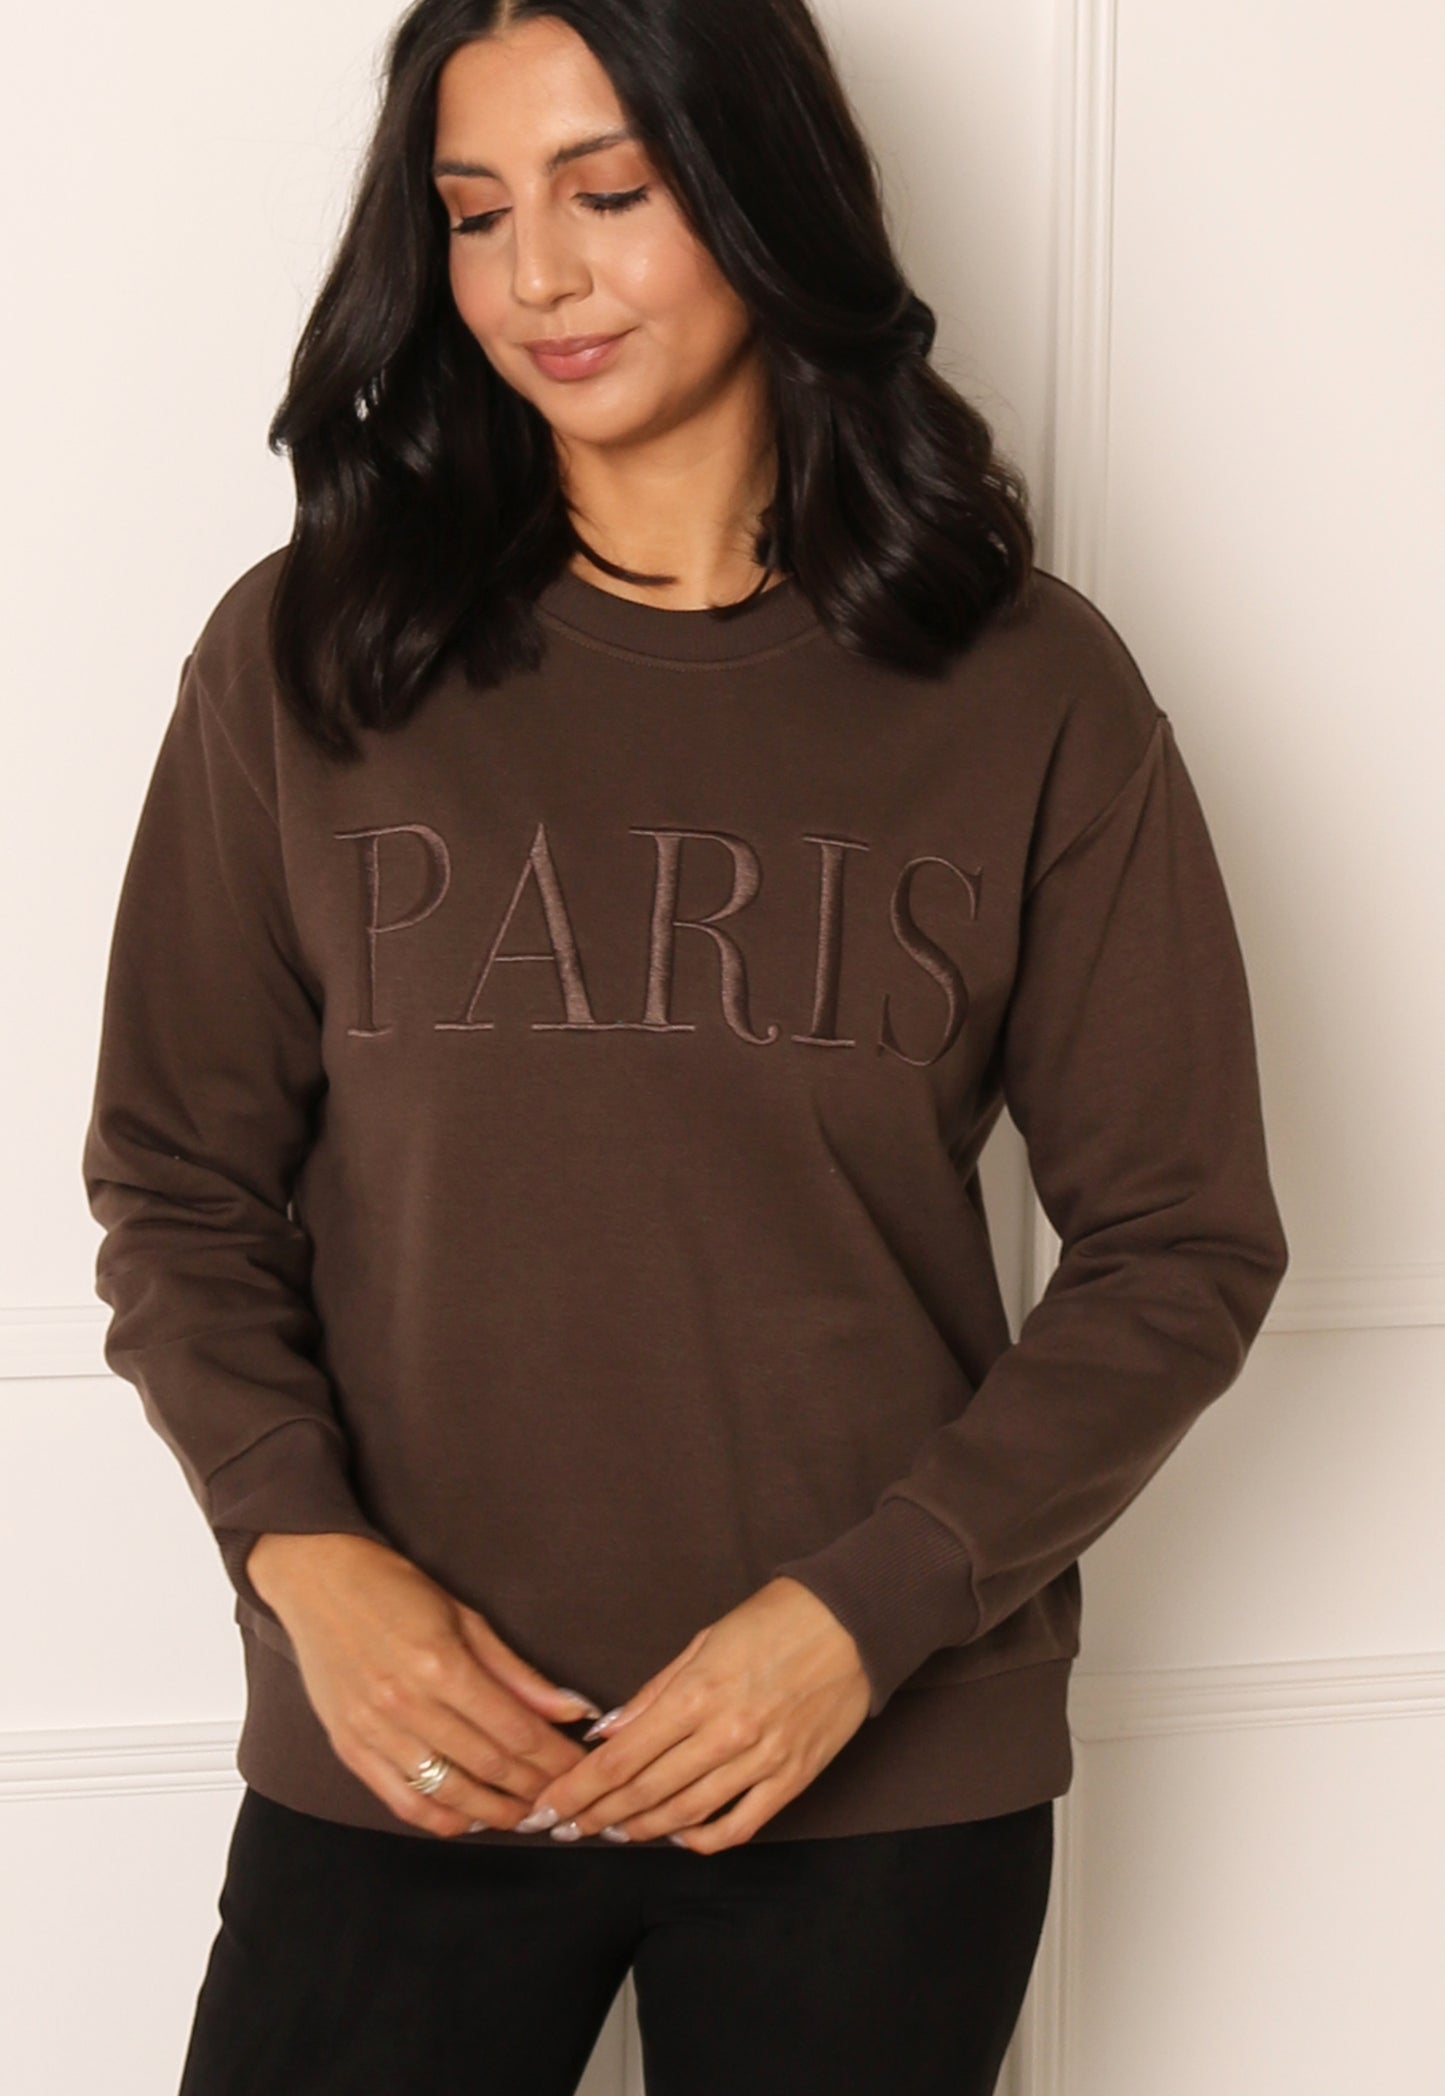 ONLY Paris Embroidered Slogan Sweatshirt in Chocolate Brown - concretebartops